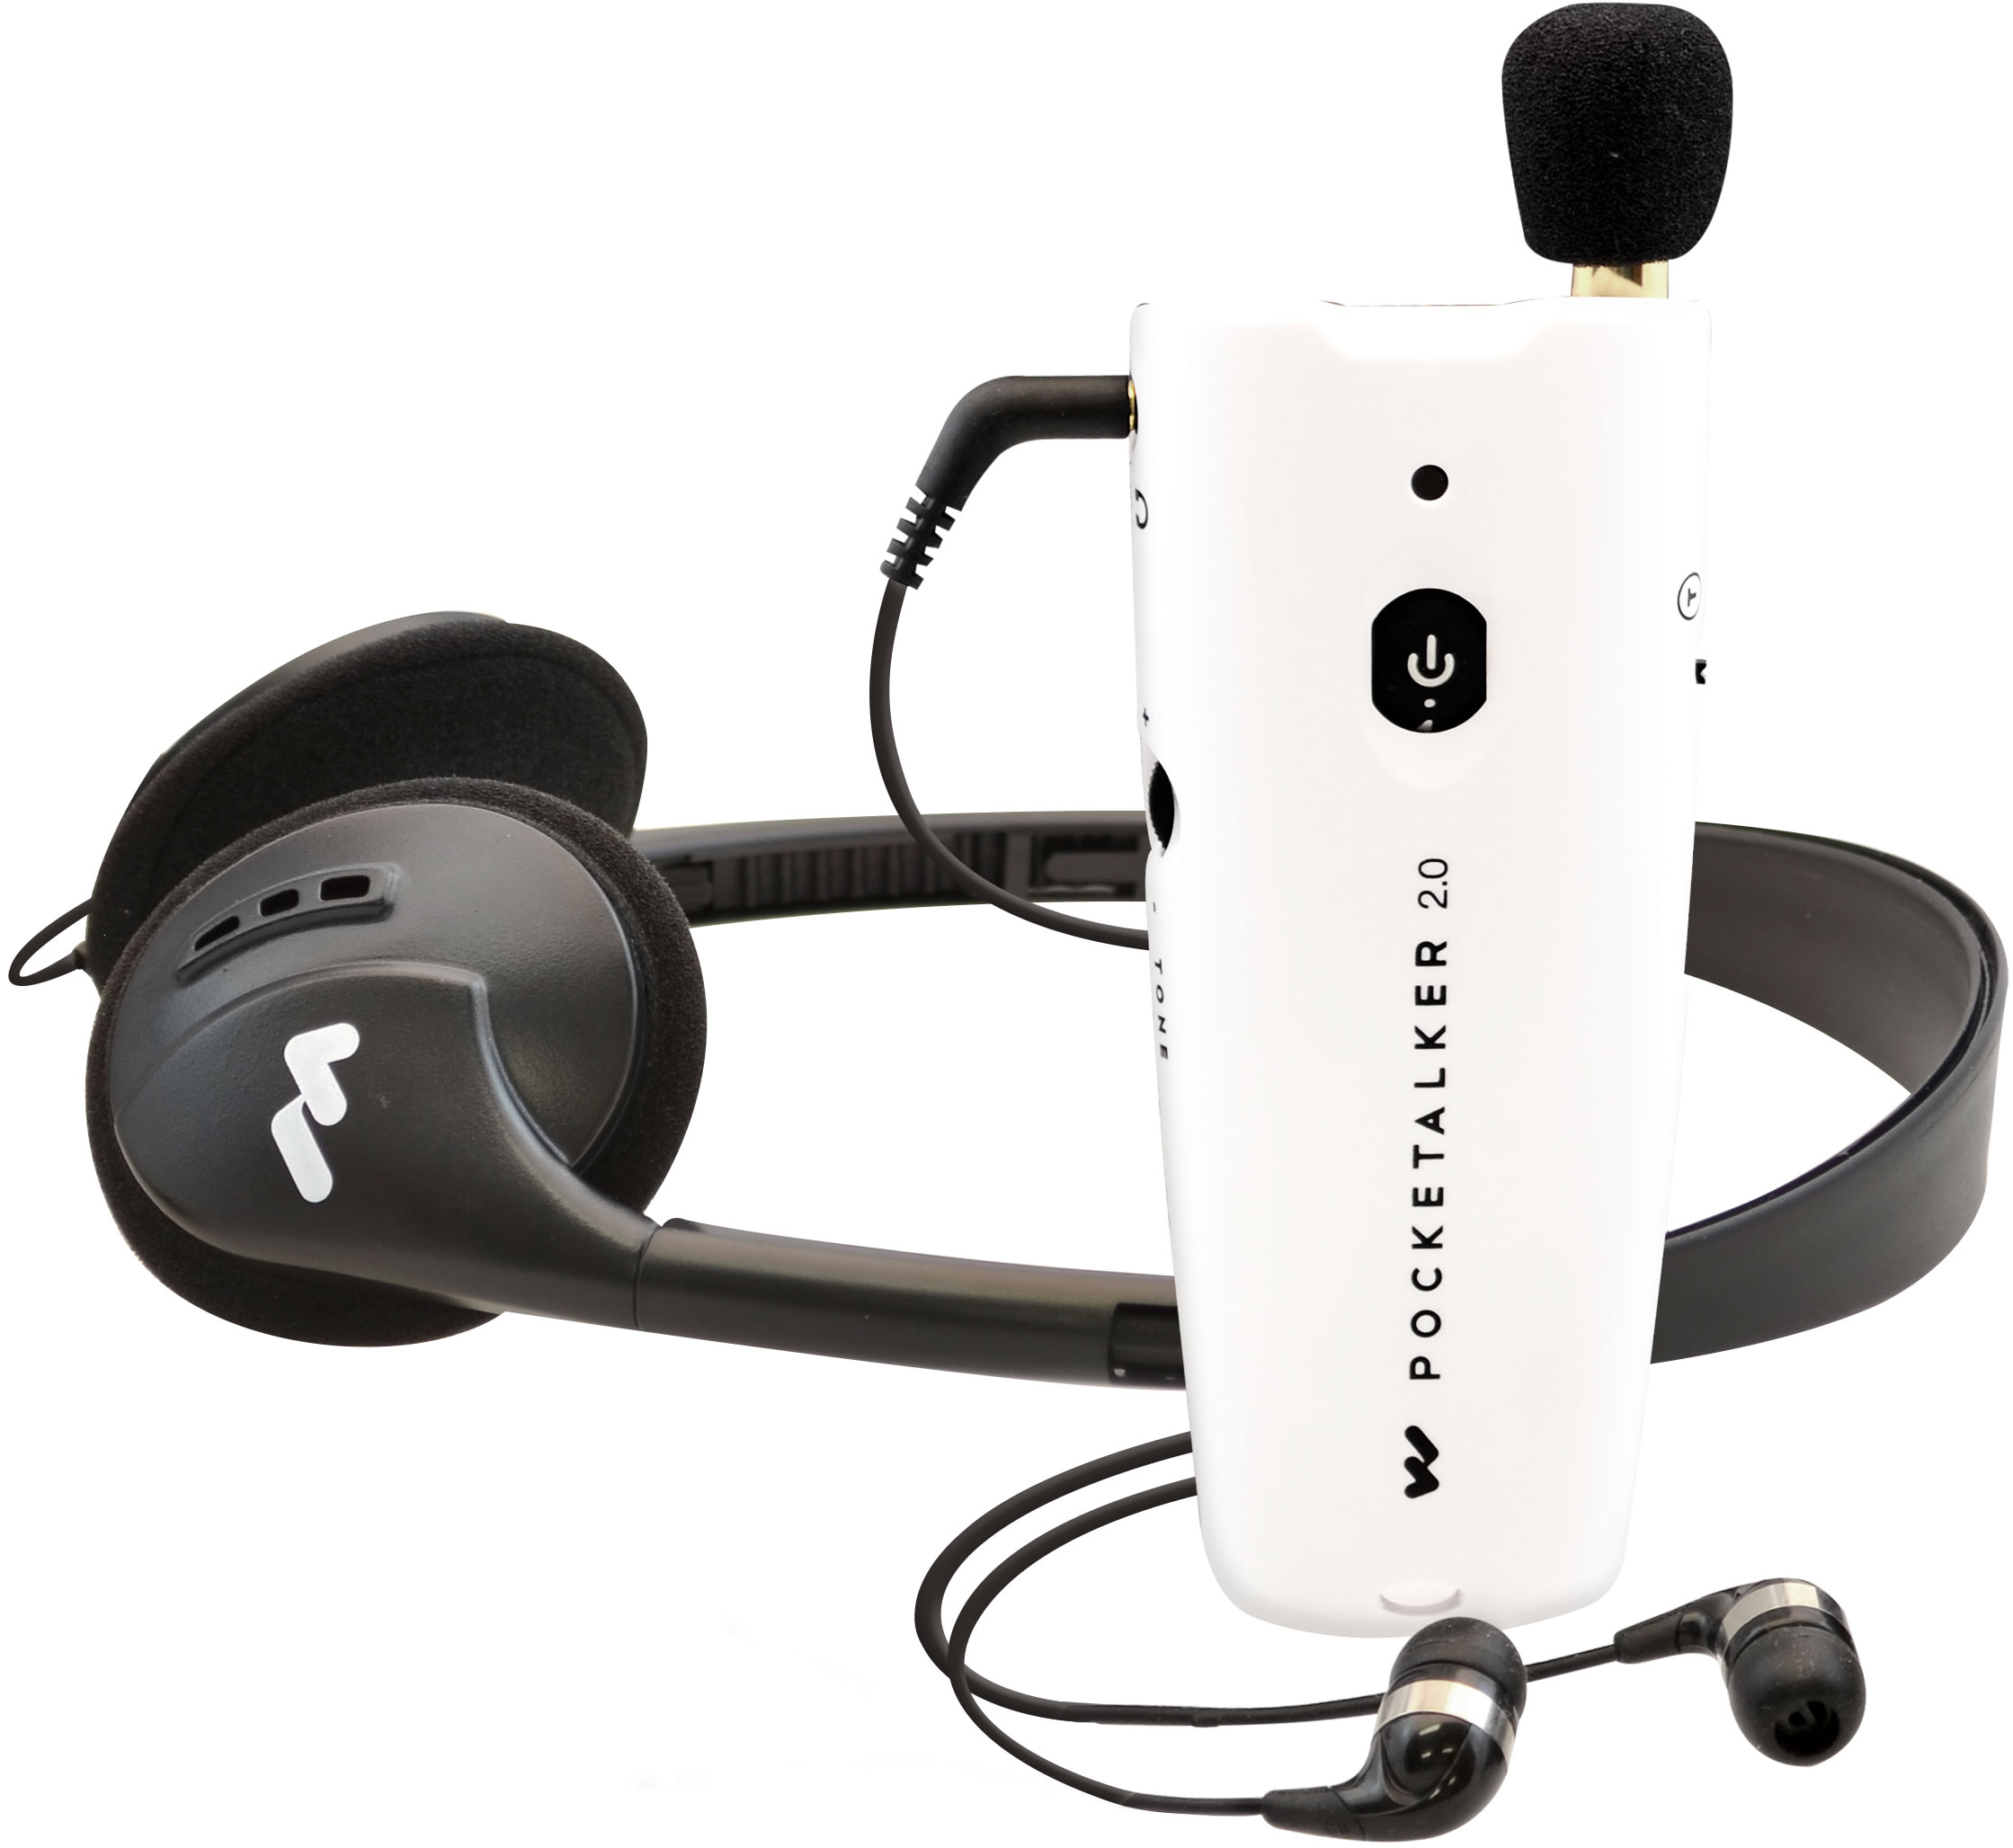 The Williams Sound Pocketalker 2.0 personal amplifier helps you hear conversations better.